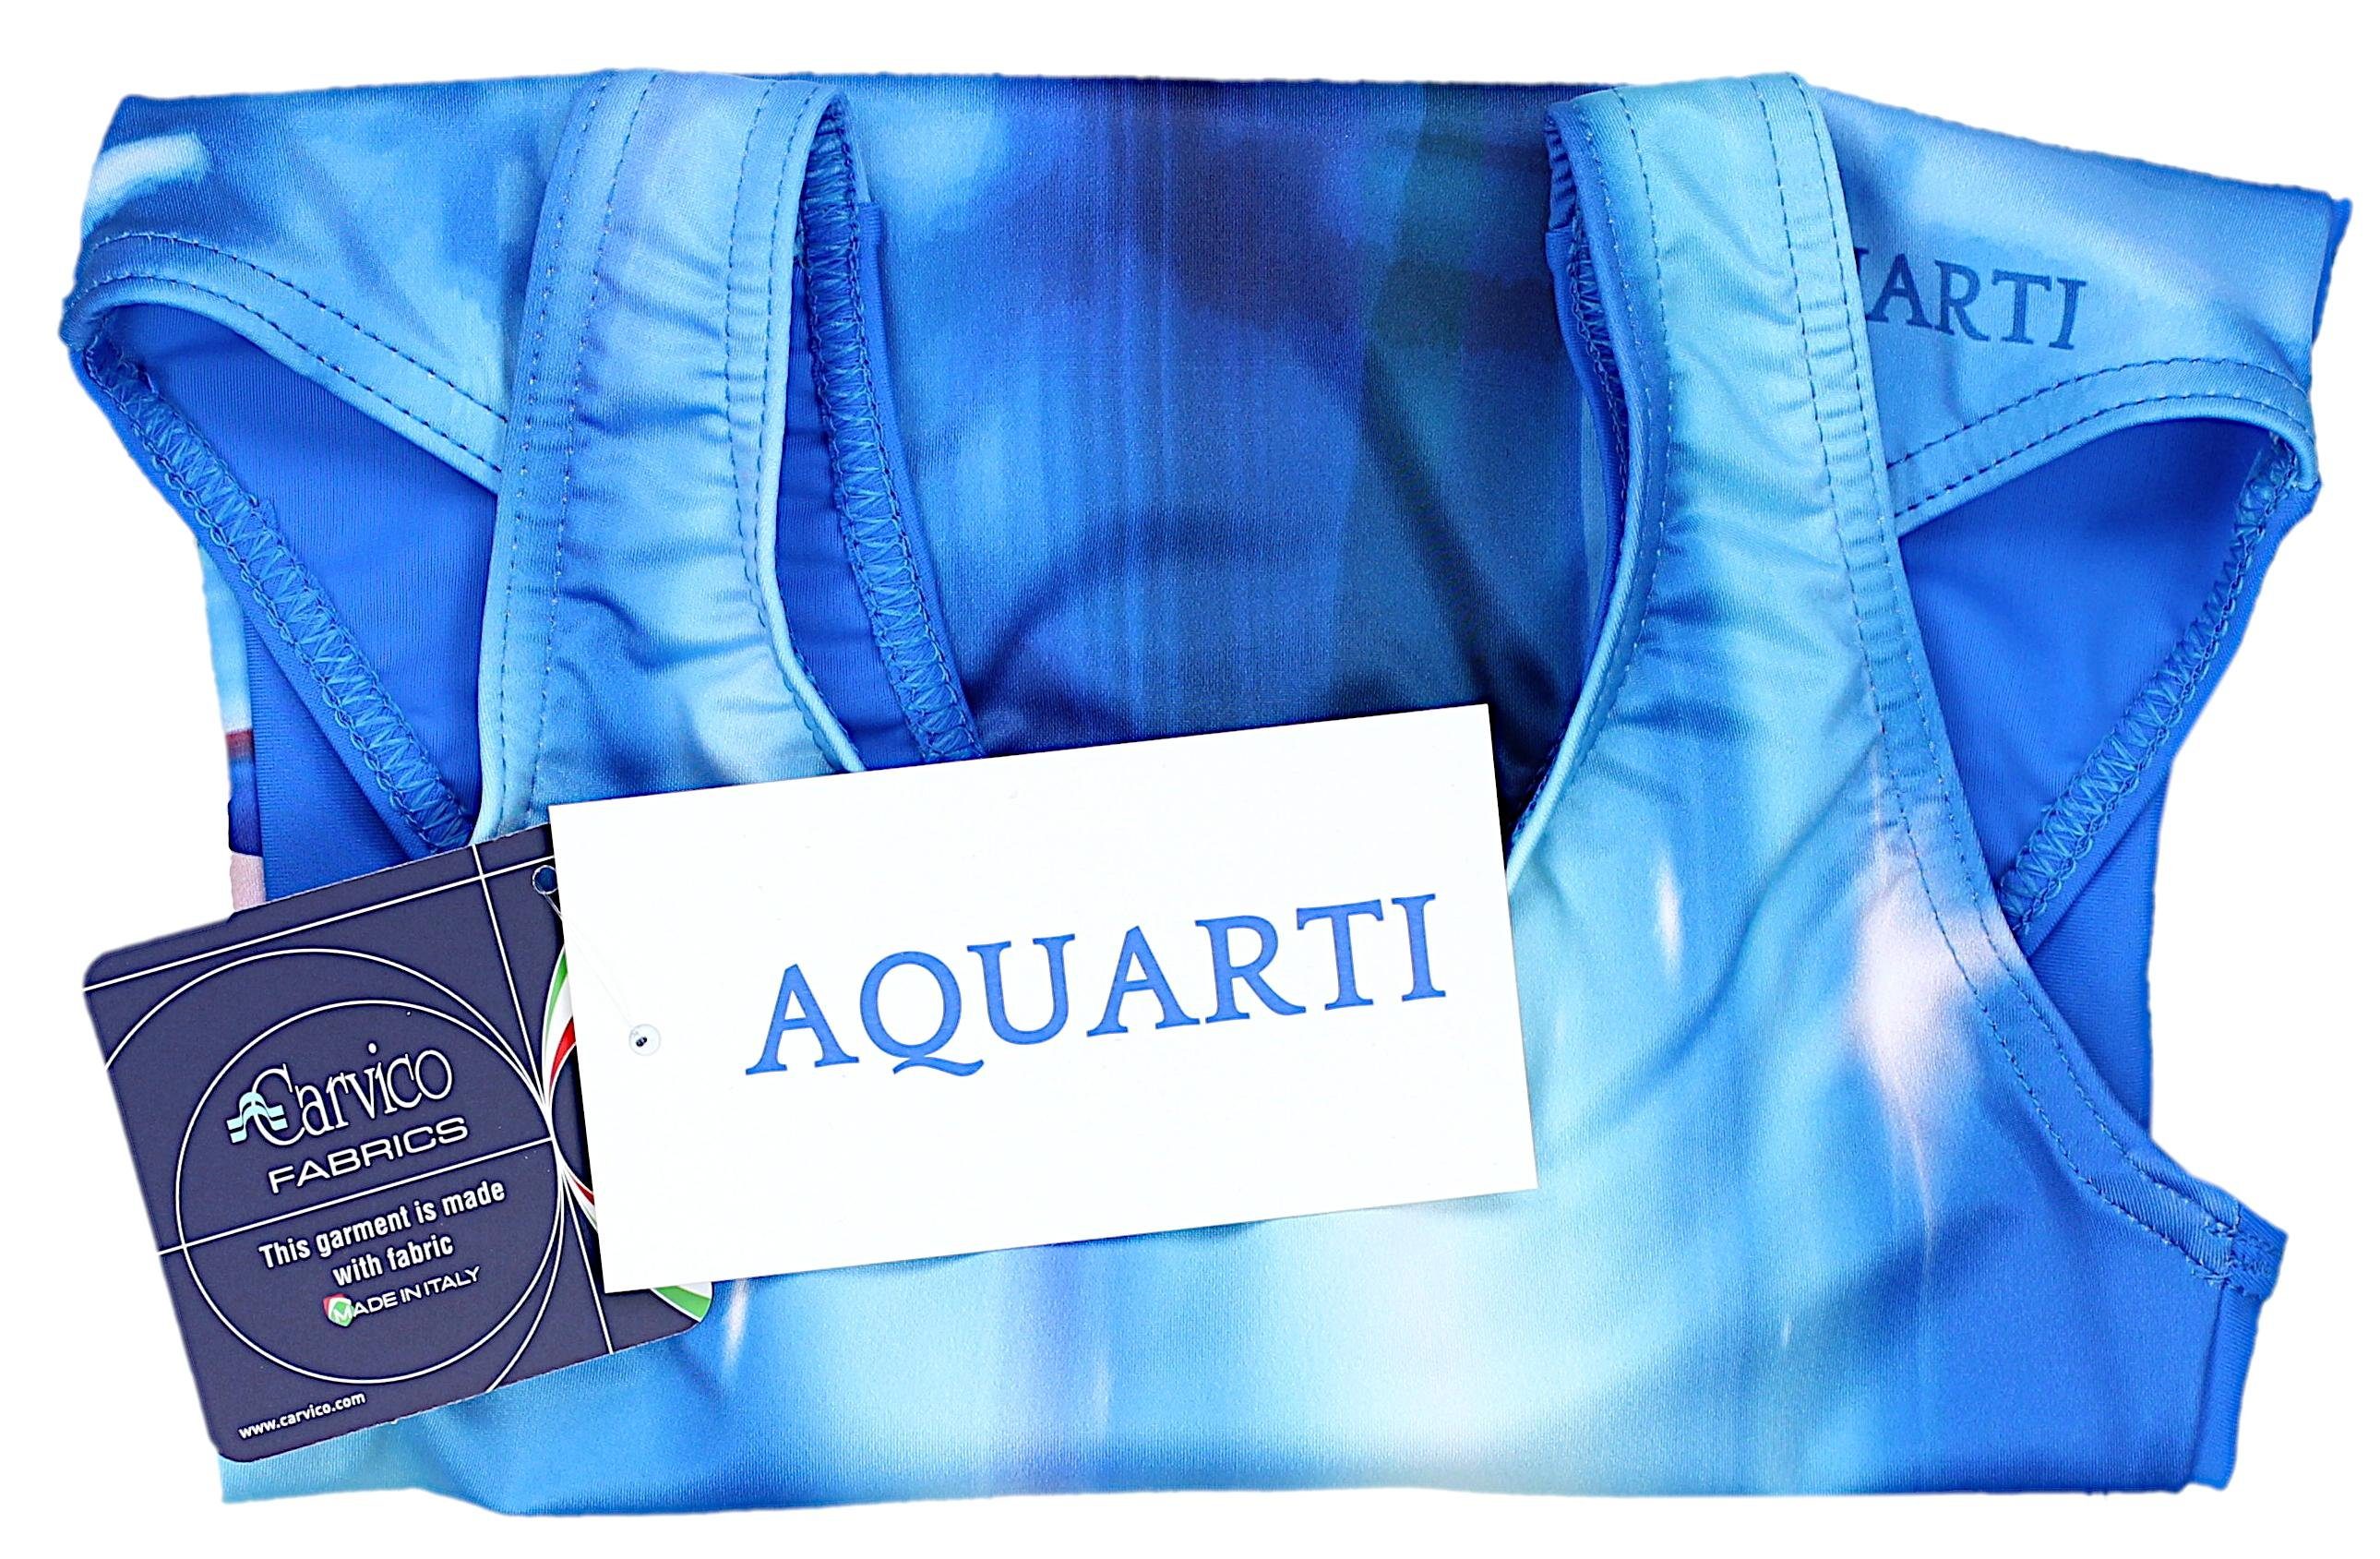 Aquarti Badeanzug Aquarti Badeanzug / mit / Rosa Wal Mädchen Polarnacht Print Ringerrücken / Blau